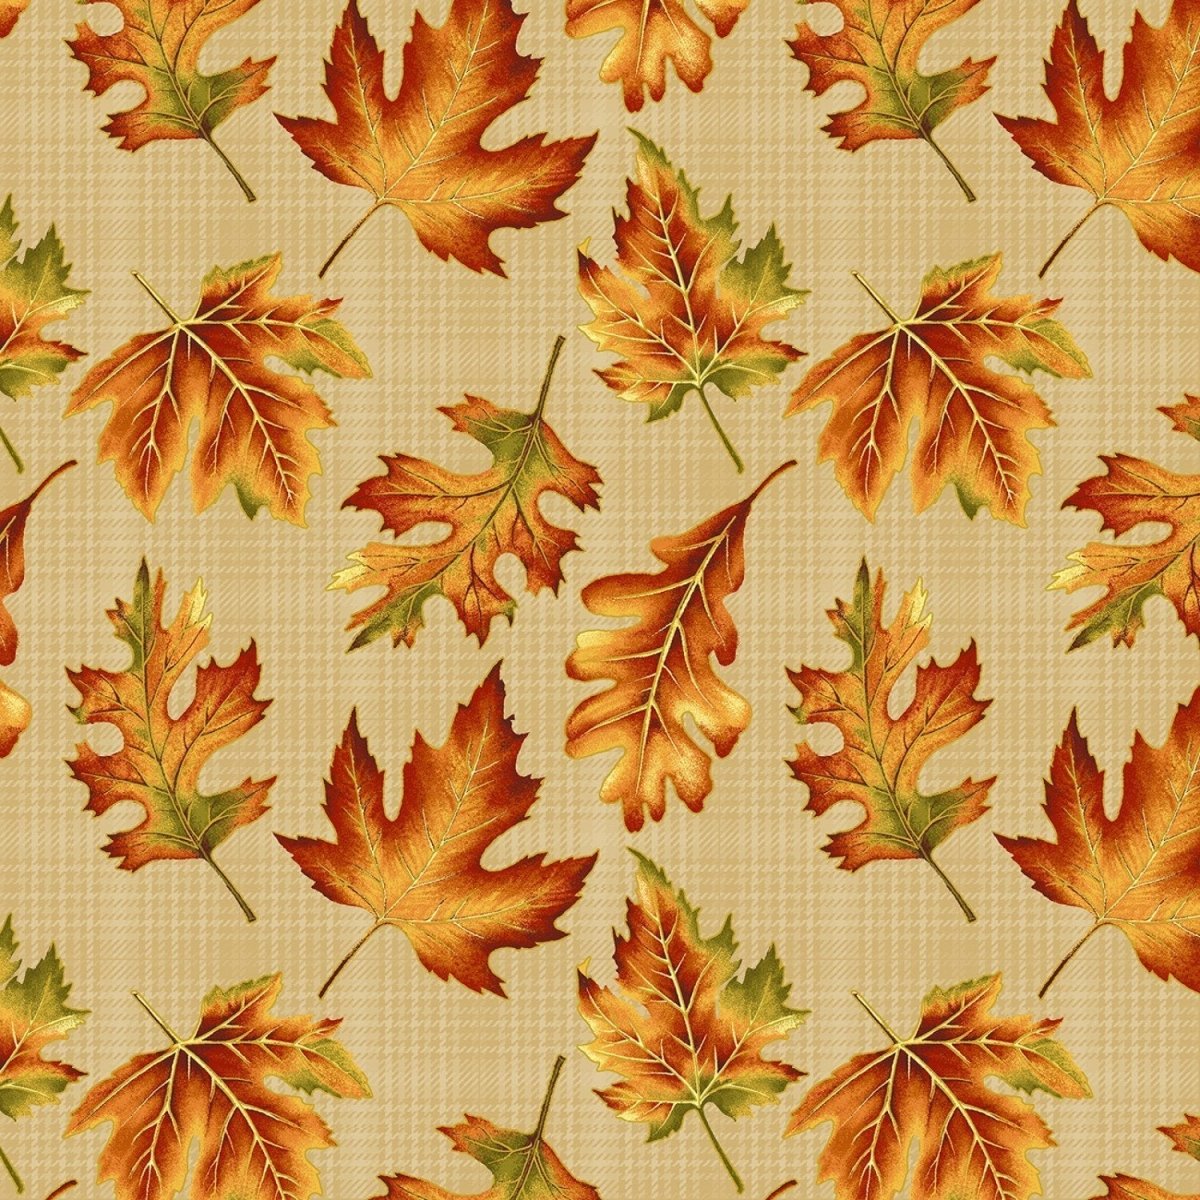 Autumn Elegance Leaf Allover Metallic Bisque Yardage| SKU: 1670M-07 -1670M-07 - Justin Fabric!